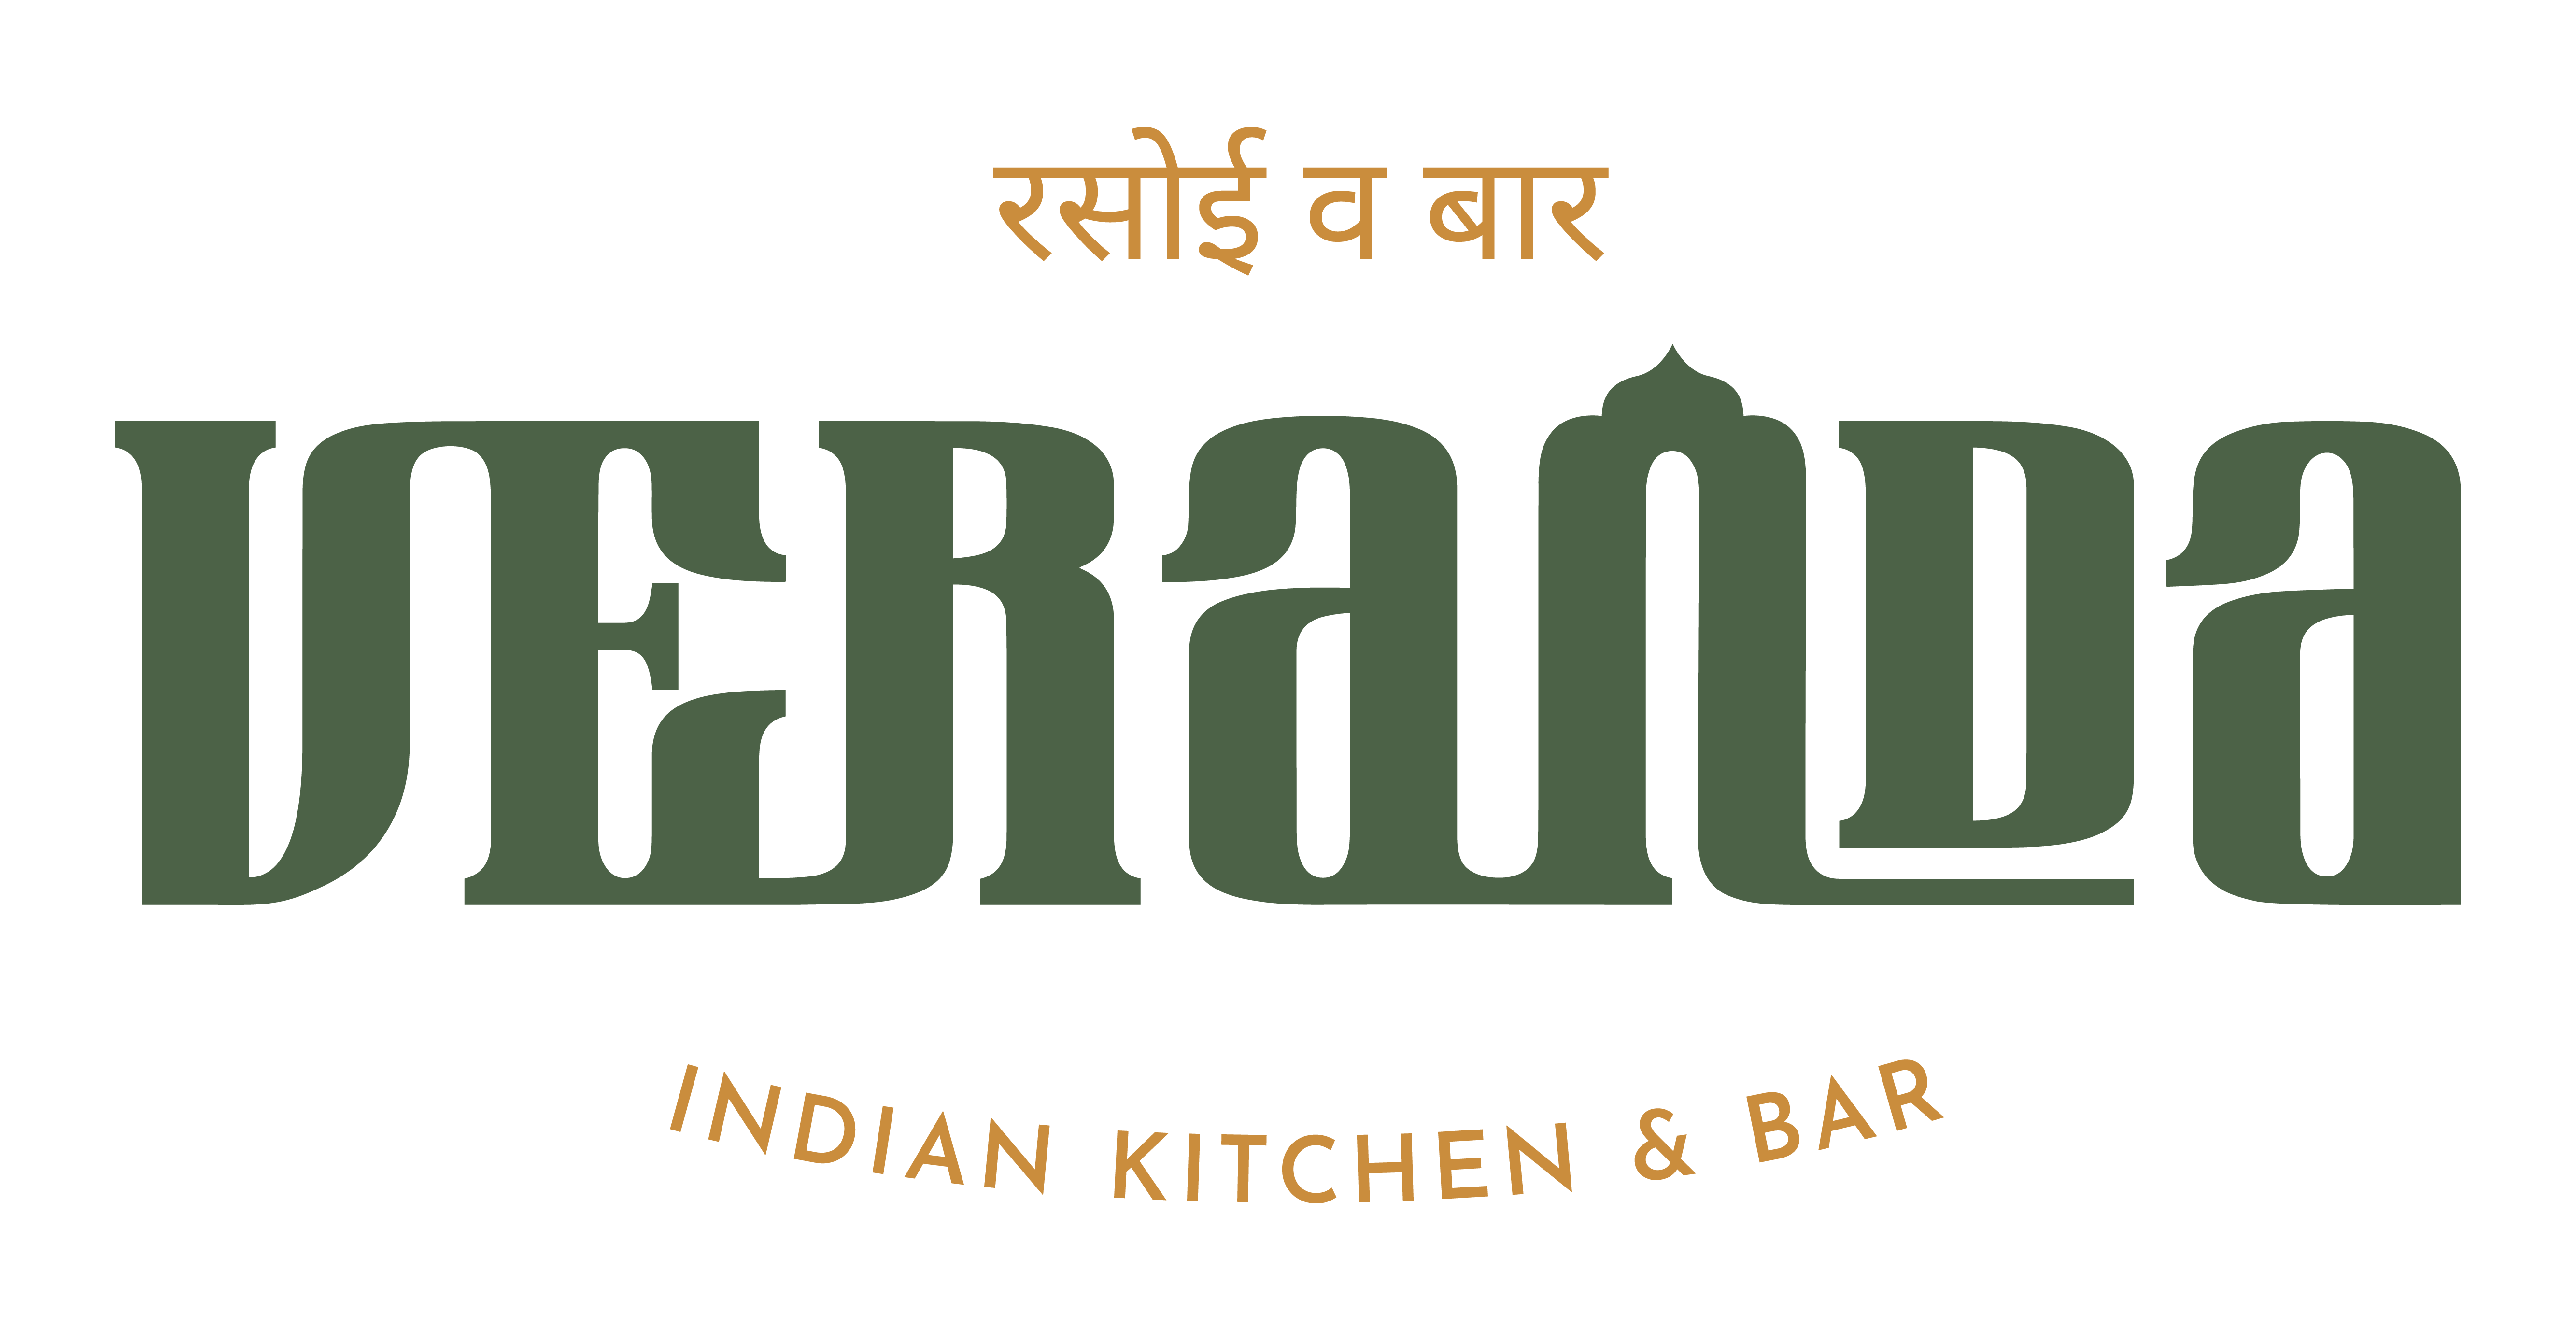 Verandah Indian Kitchen & Bar